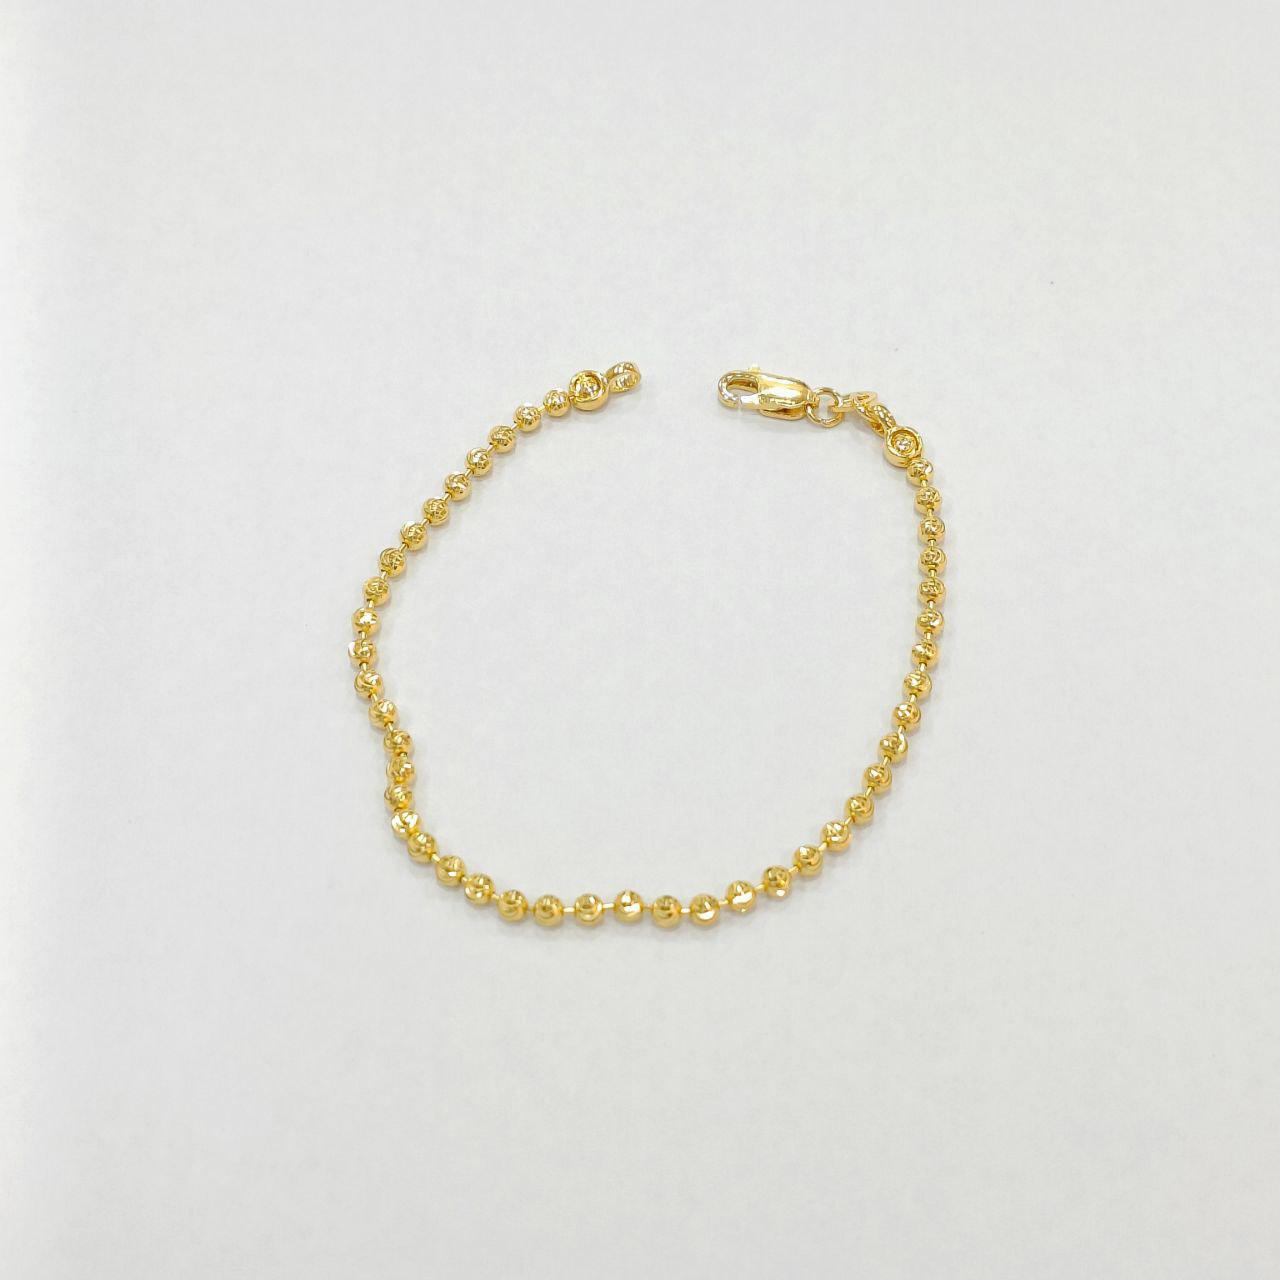 22k / 916 Gold Spiral Shiny Ball bracelet-916 gold-Best Gold Shop